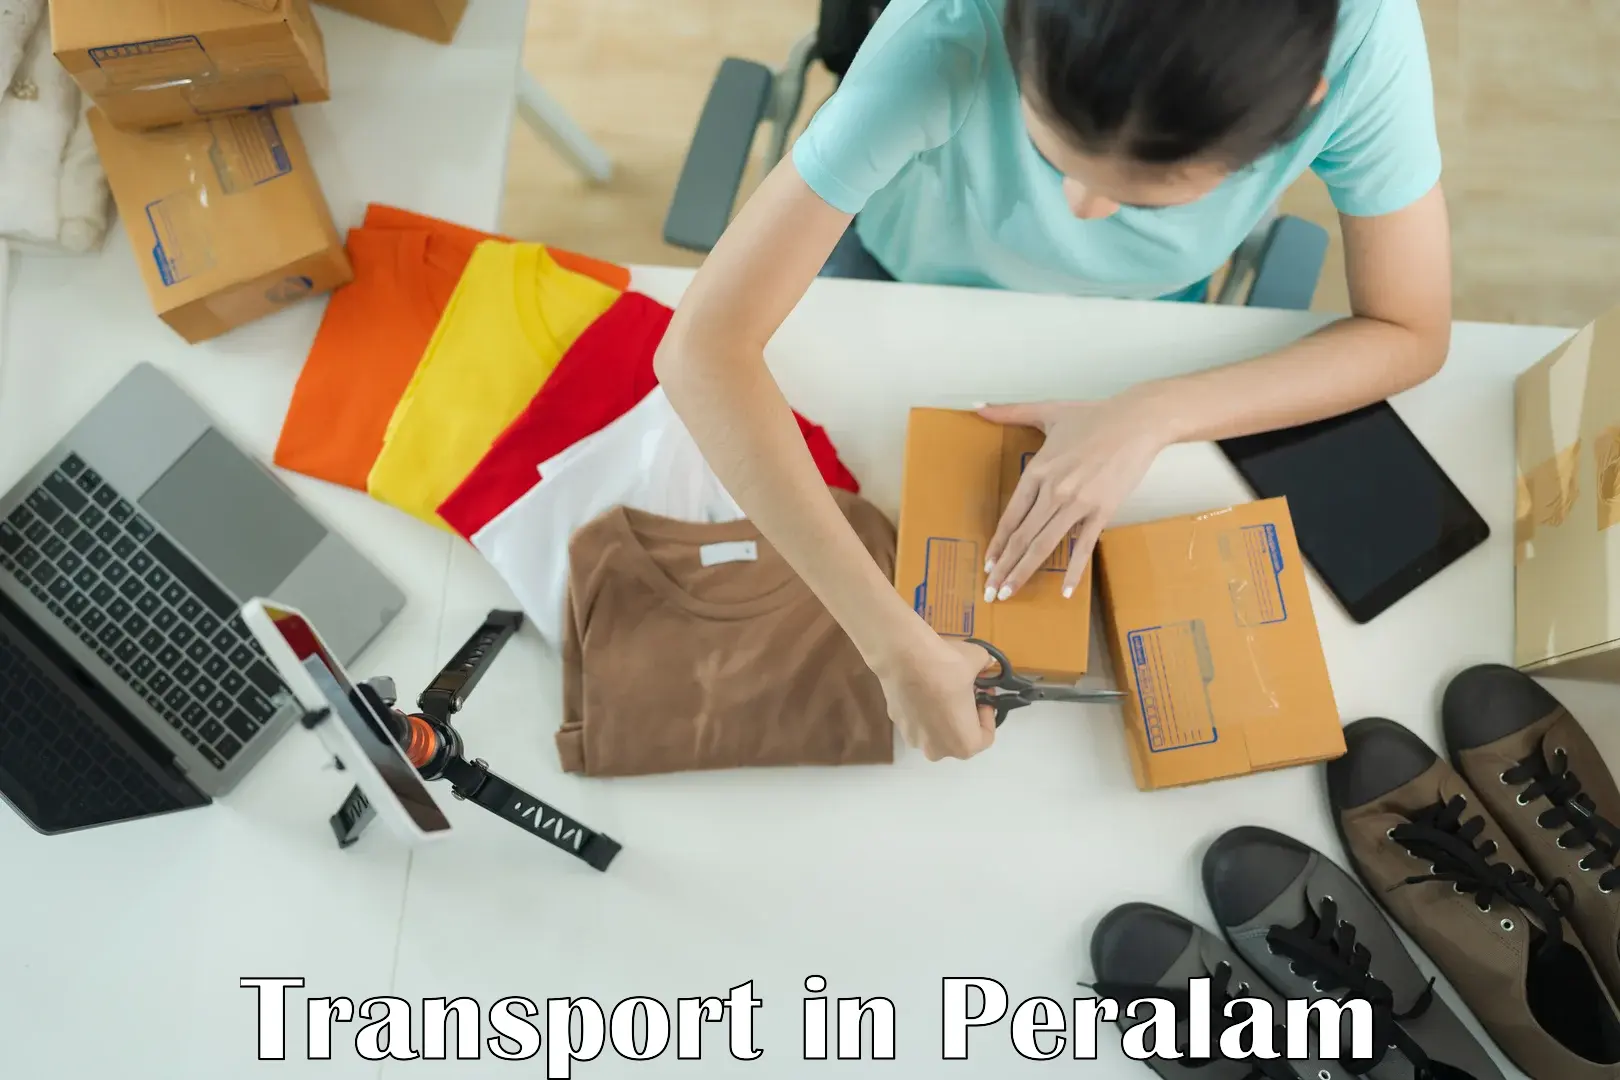 Interstate goods transport in Peralam